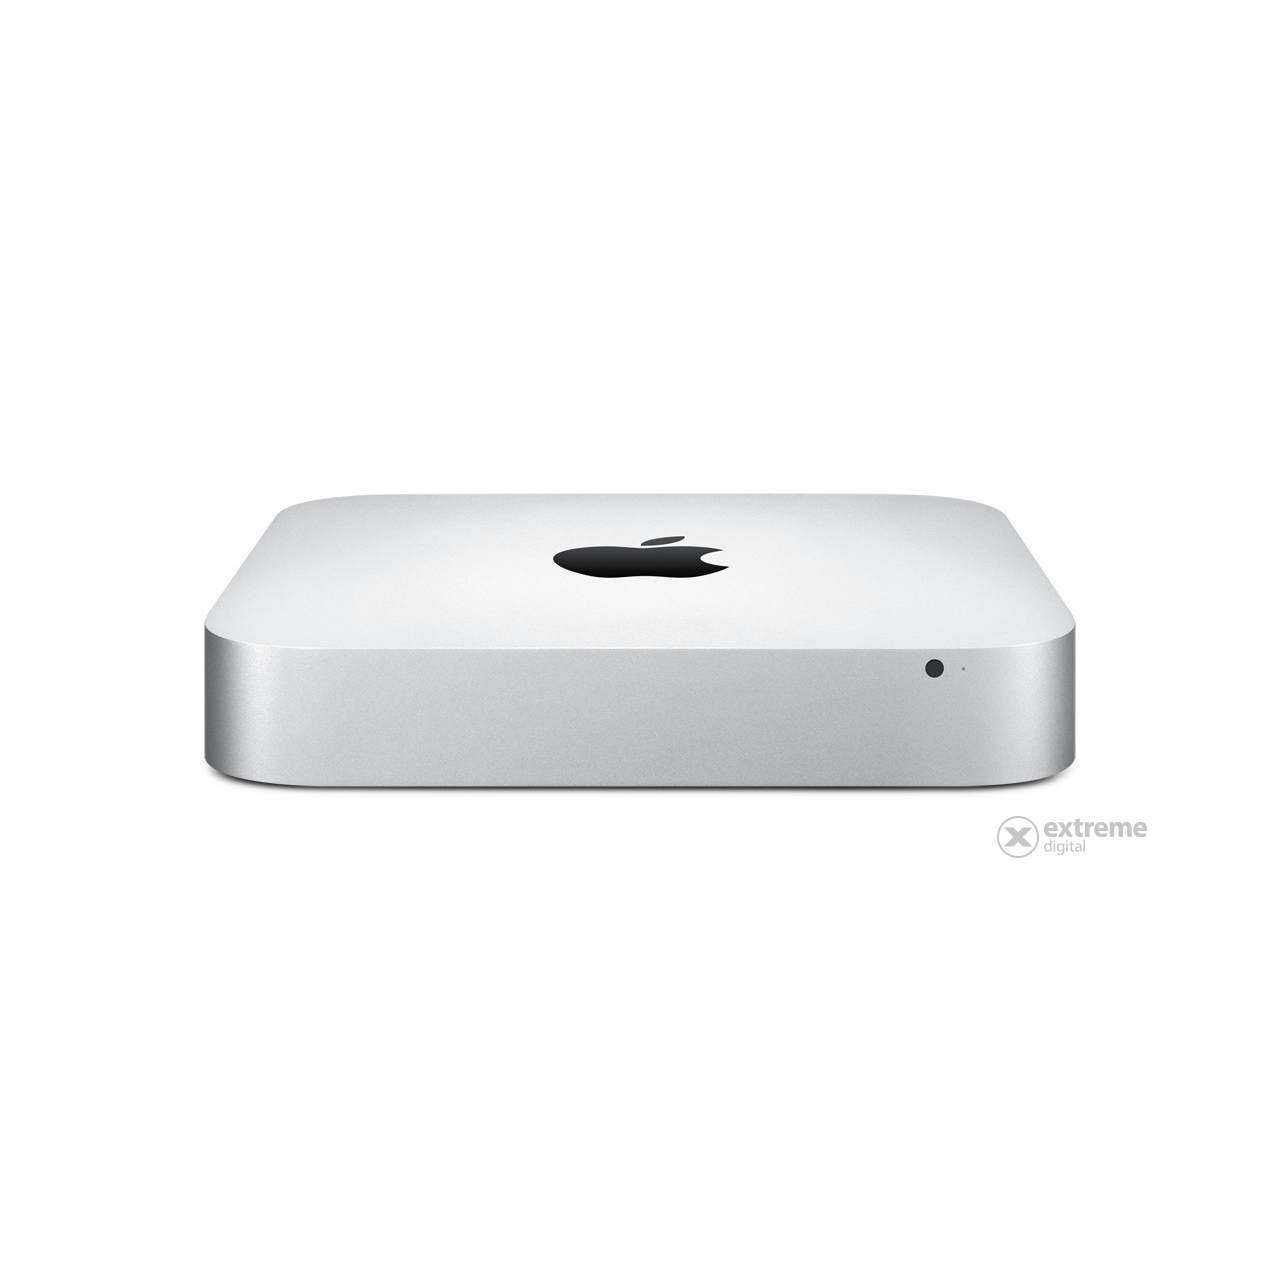 Apple Mac mini 1,4Ghz (mgem2mp/a) | Extreme Digital